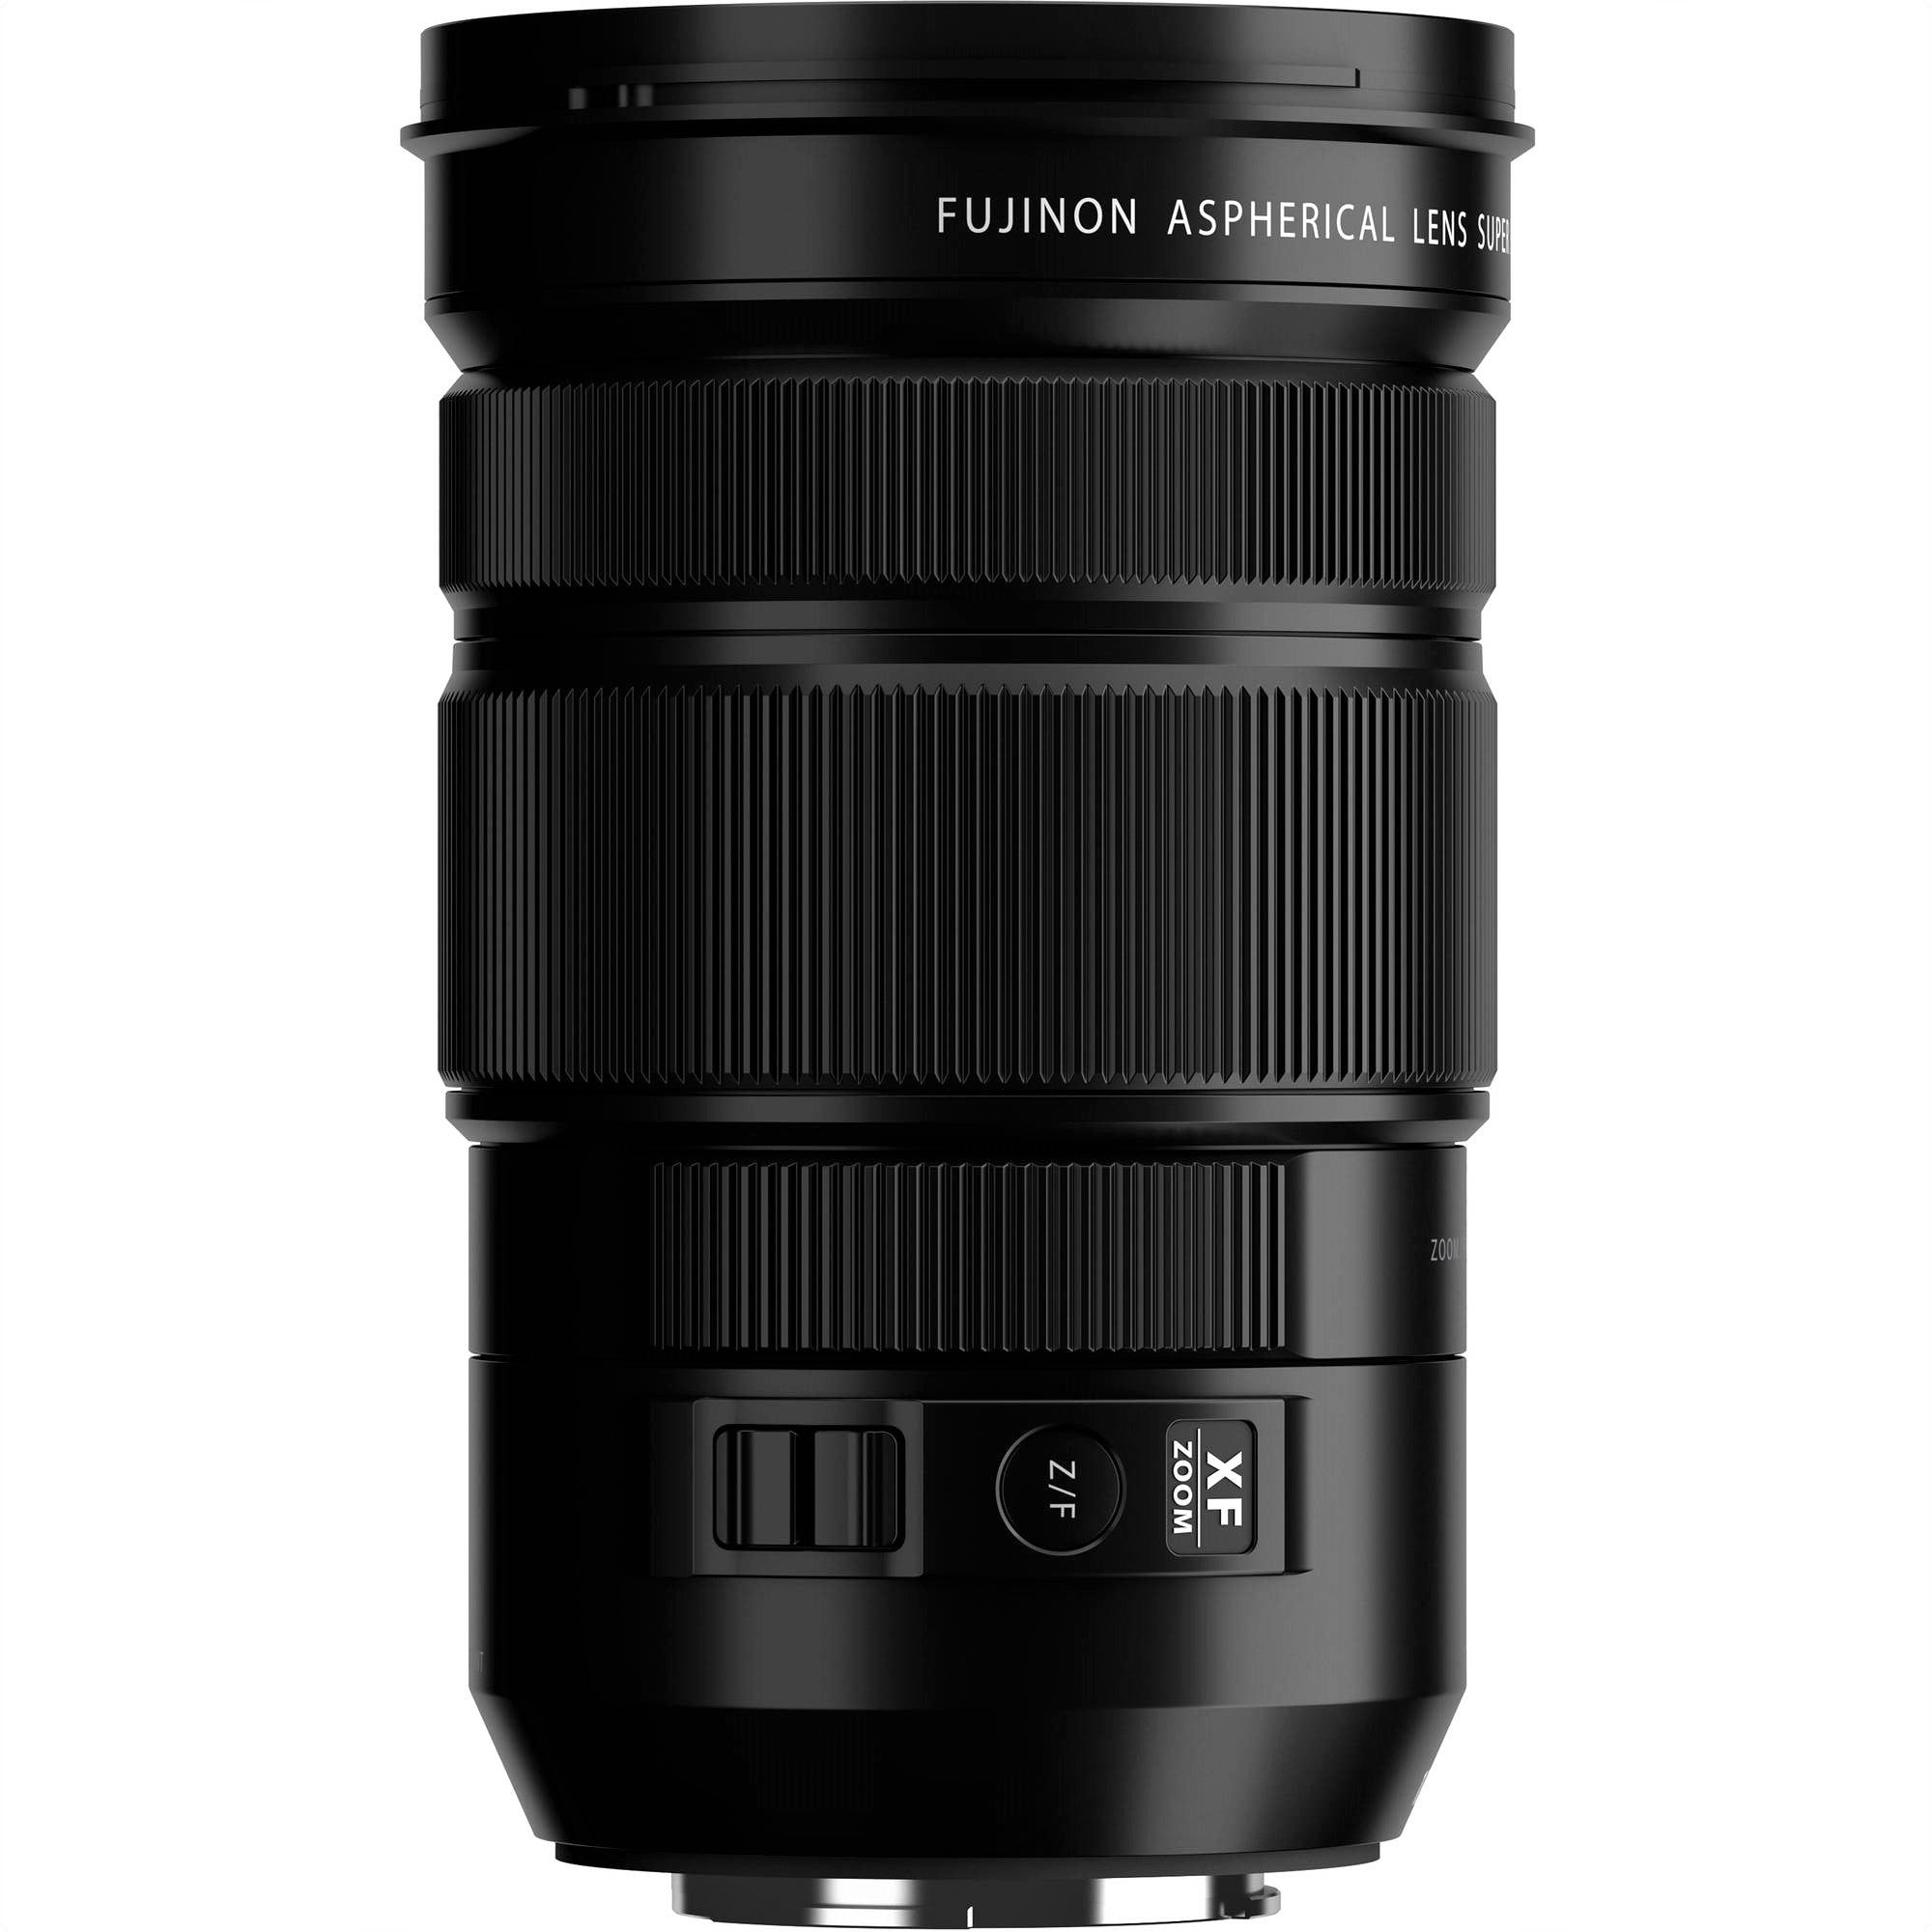 Fujifilm Fujinon XF18-120mm F4 LM PZ WR review